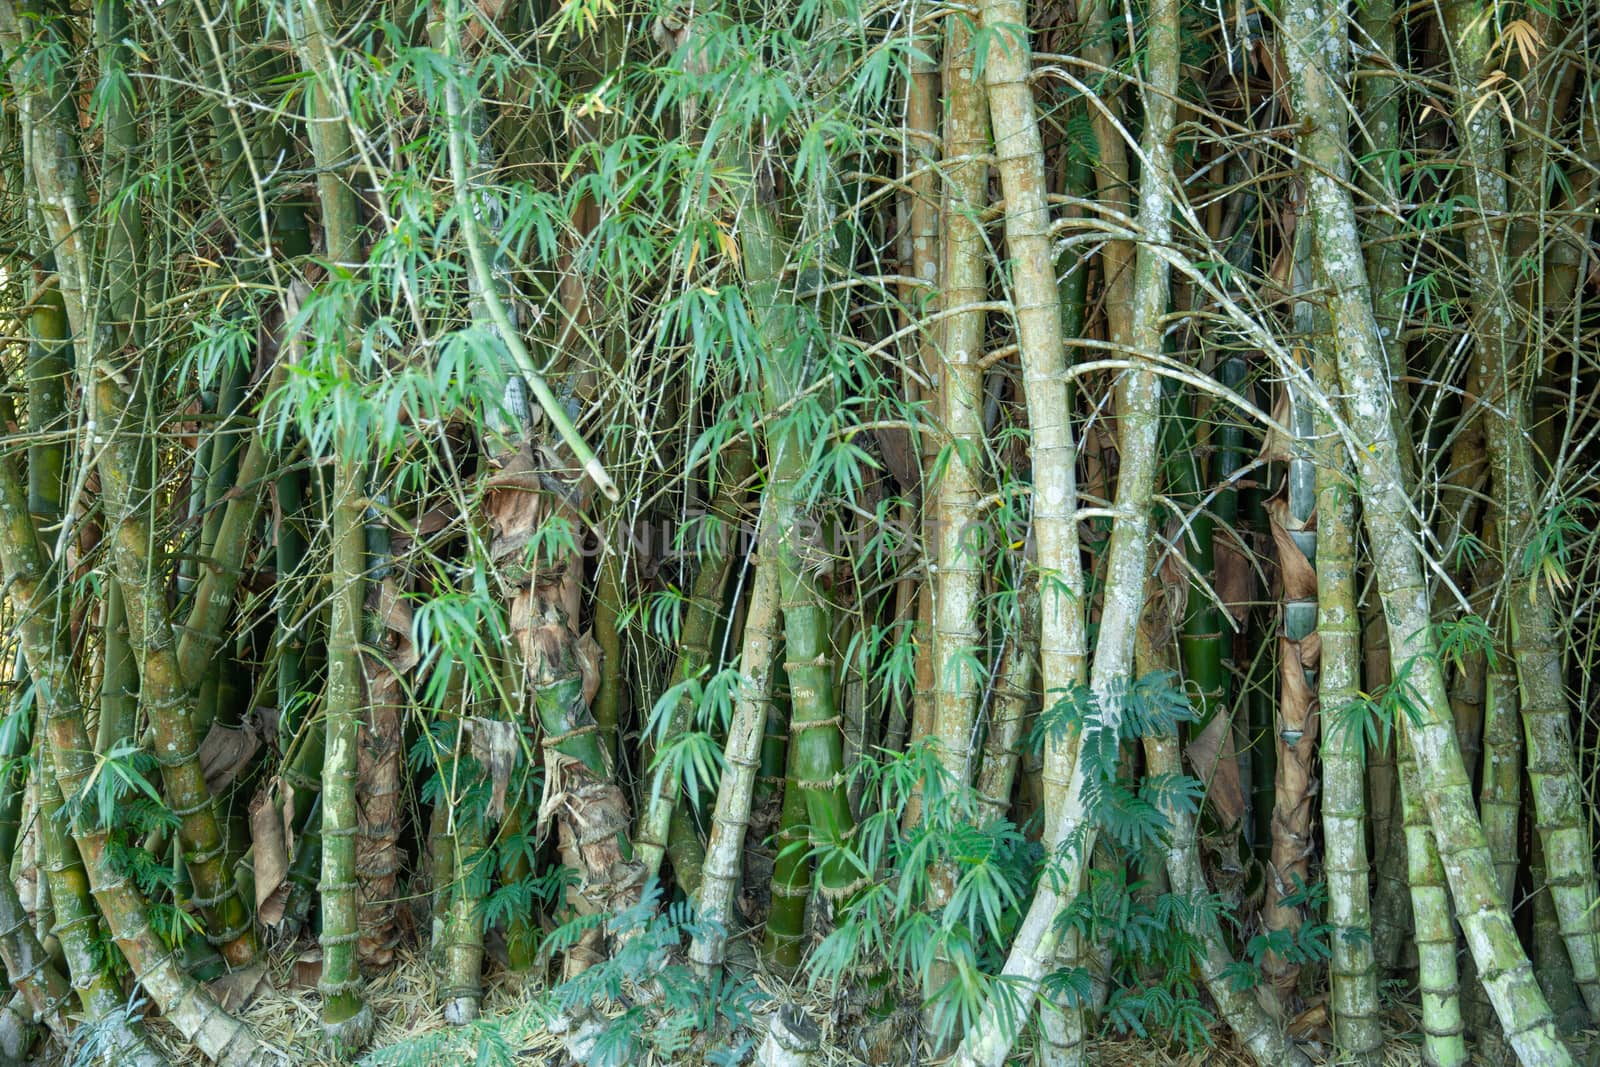 Lush bamboo thicket in the Botanical Garden of Cienfuegos, Cuba